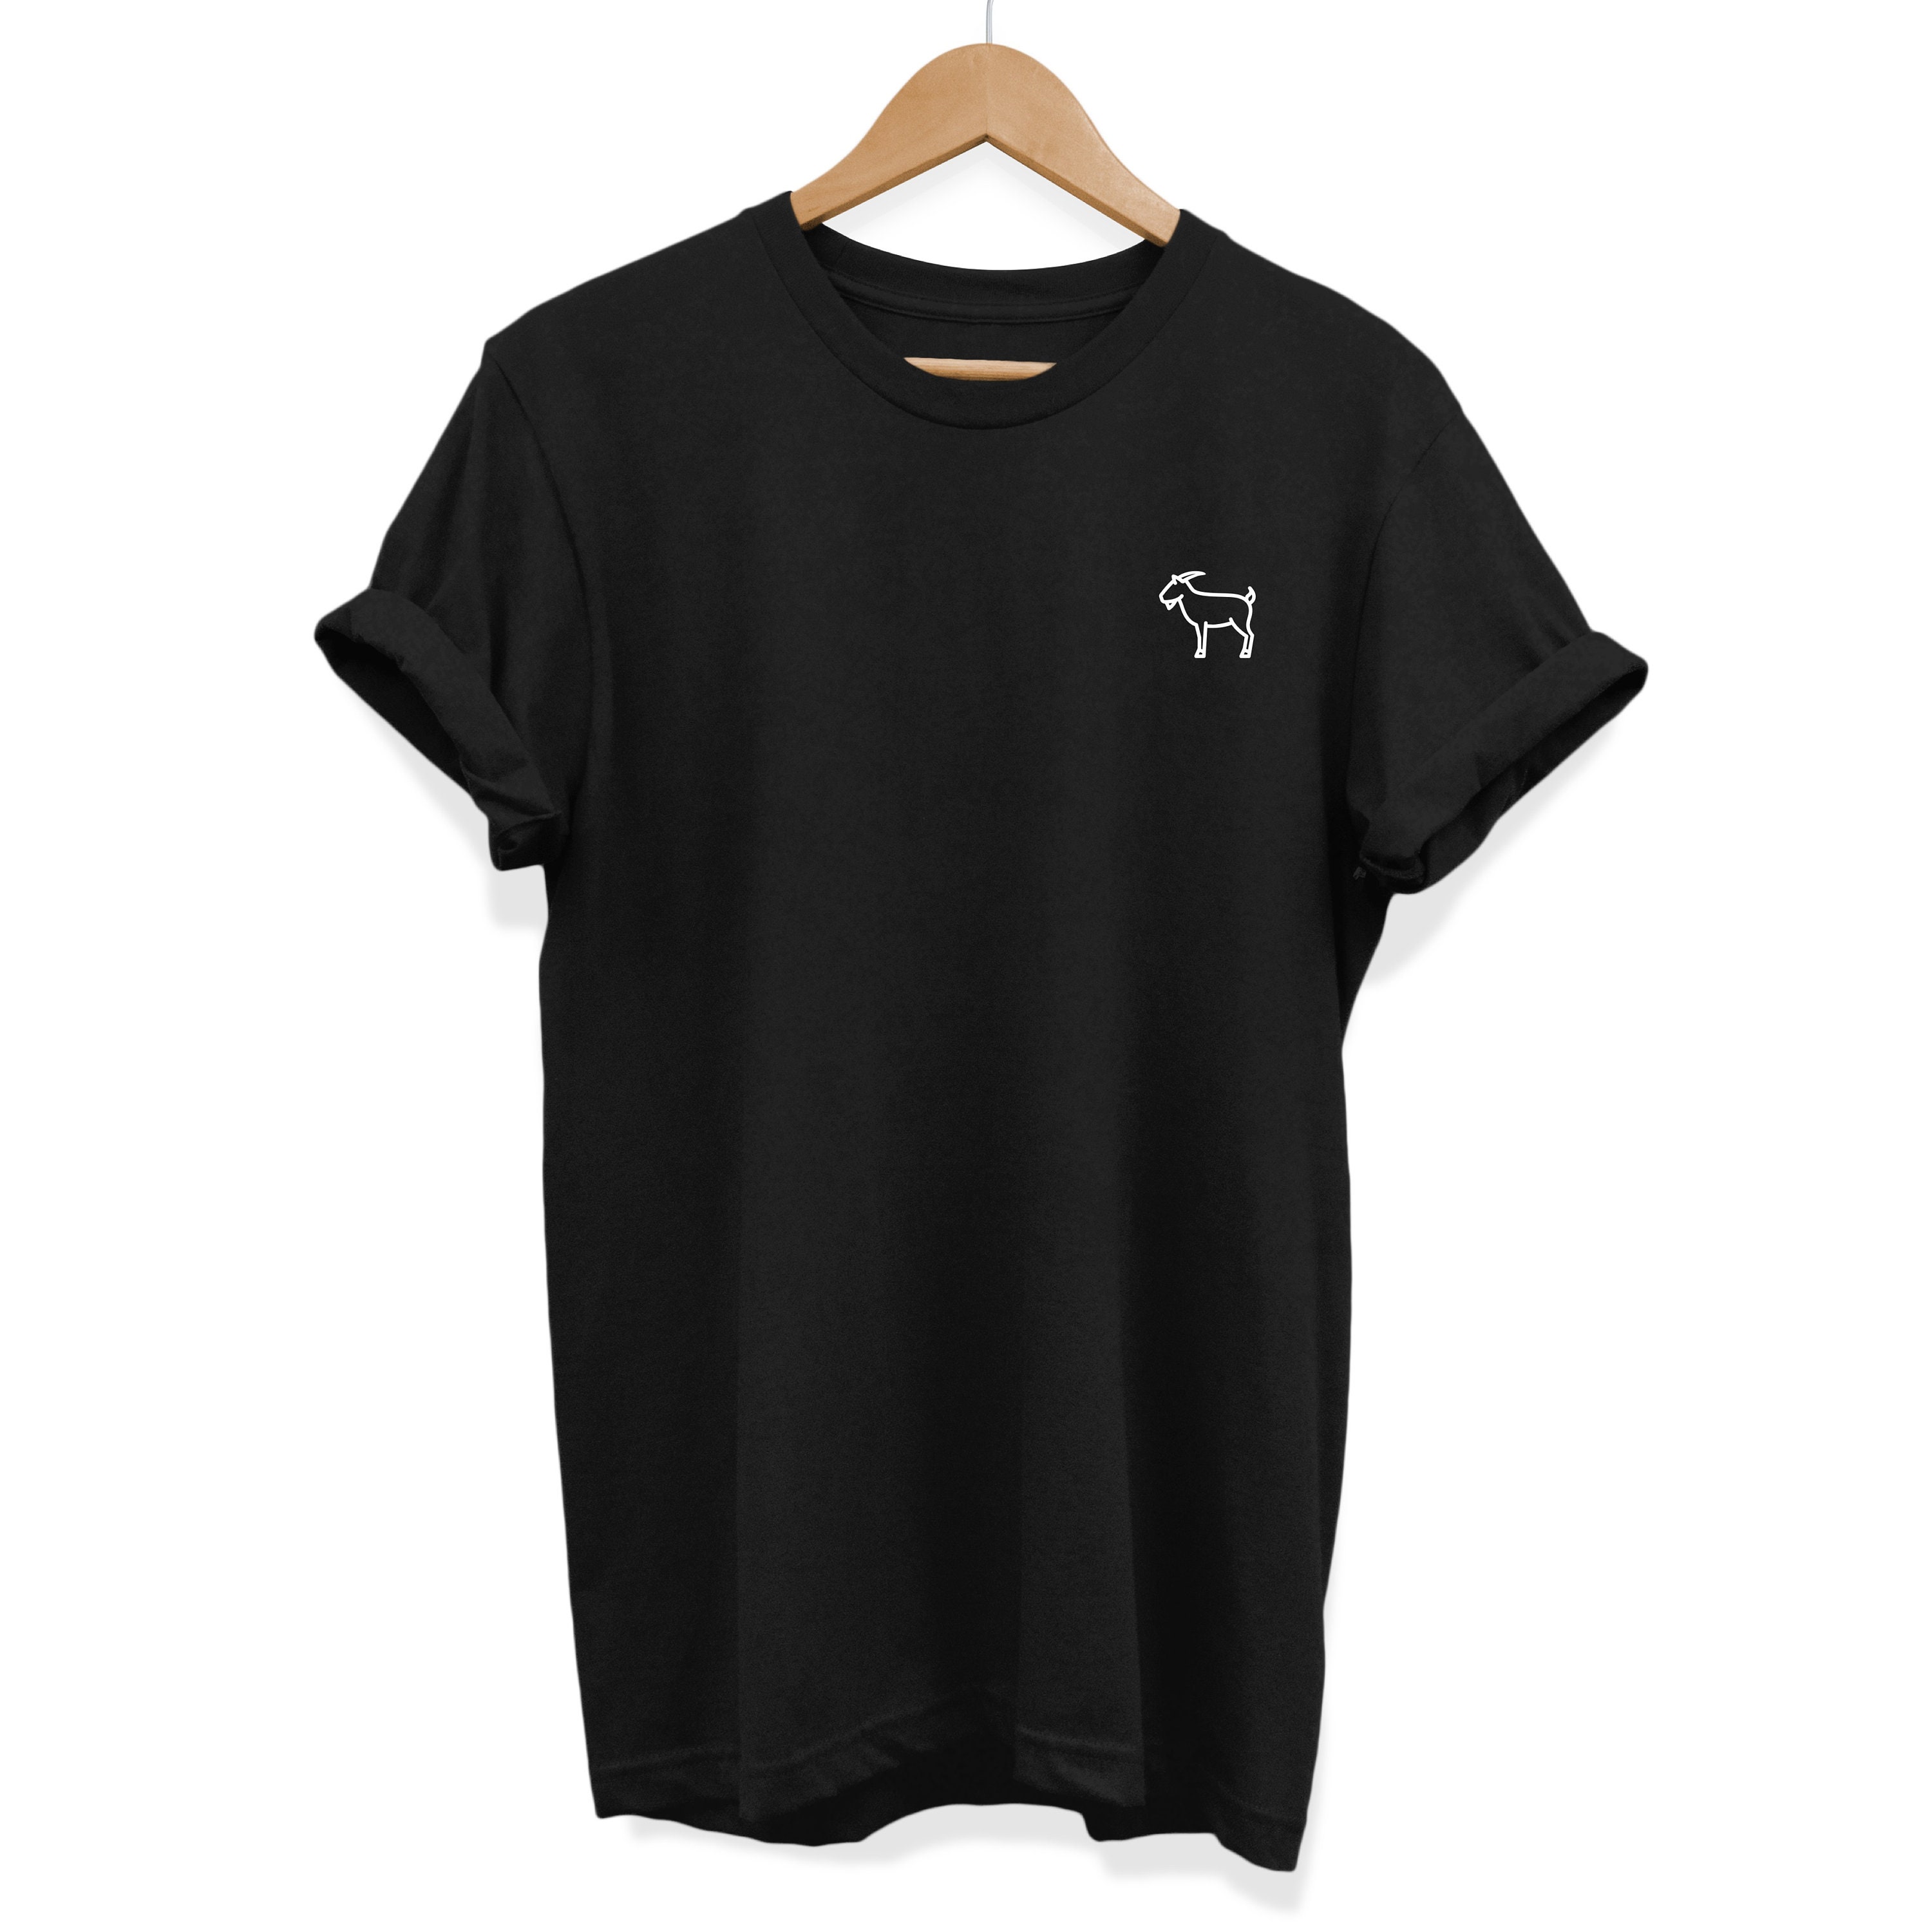 Goat Shirt the Goat Shirt Goat Icon T-shirt Greatest of All | Etsy